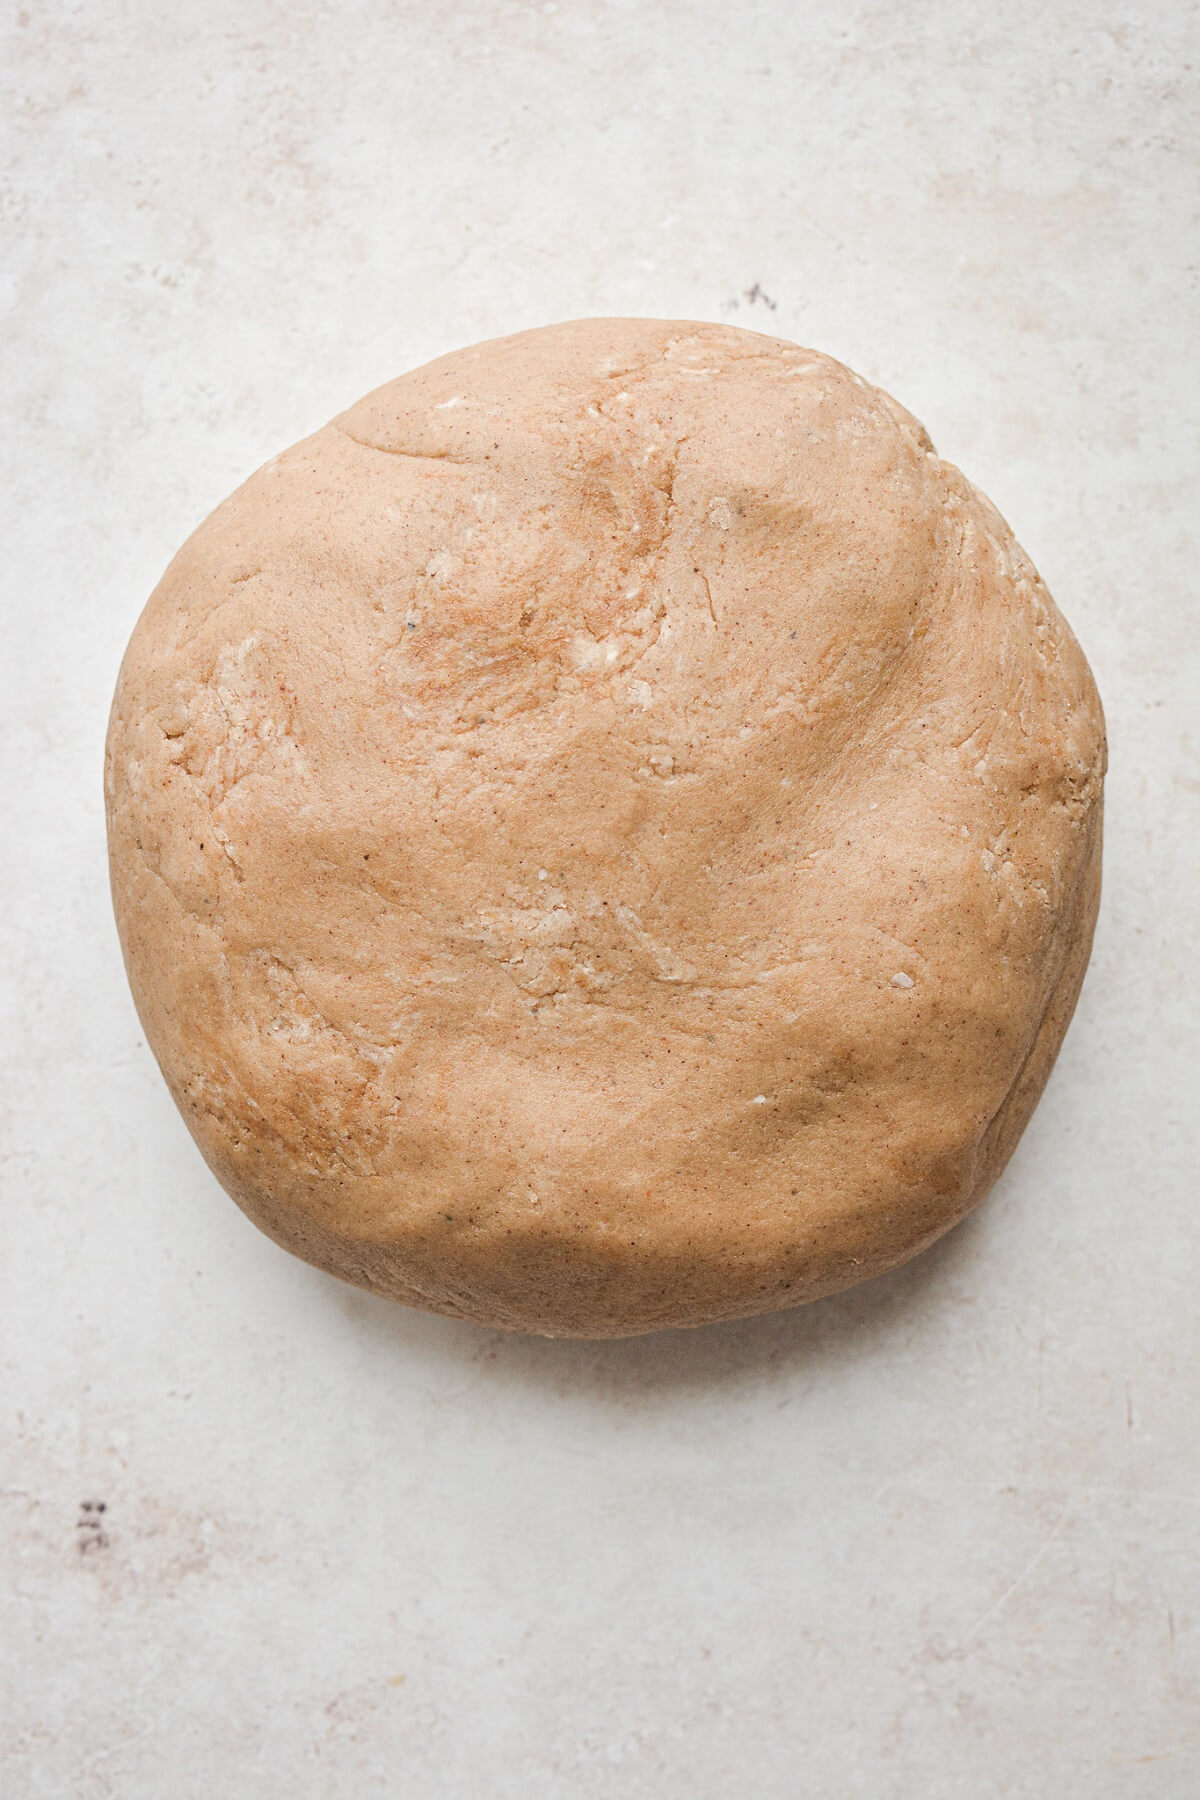 Gingerbread cookie dough.